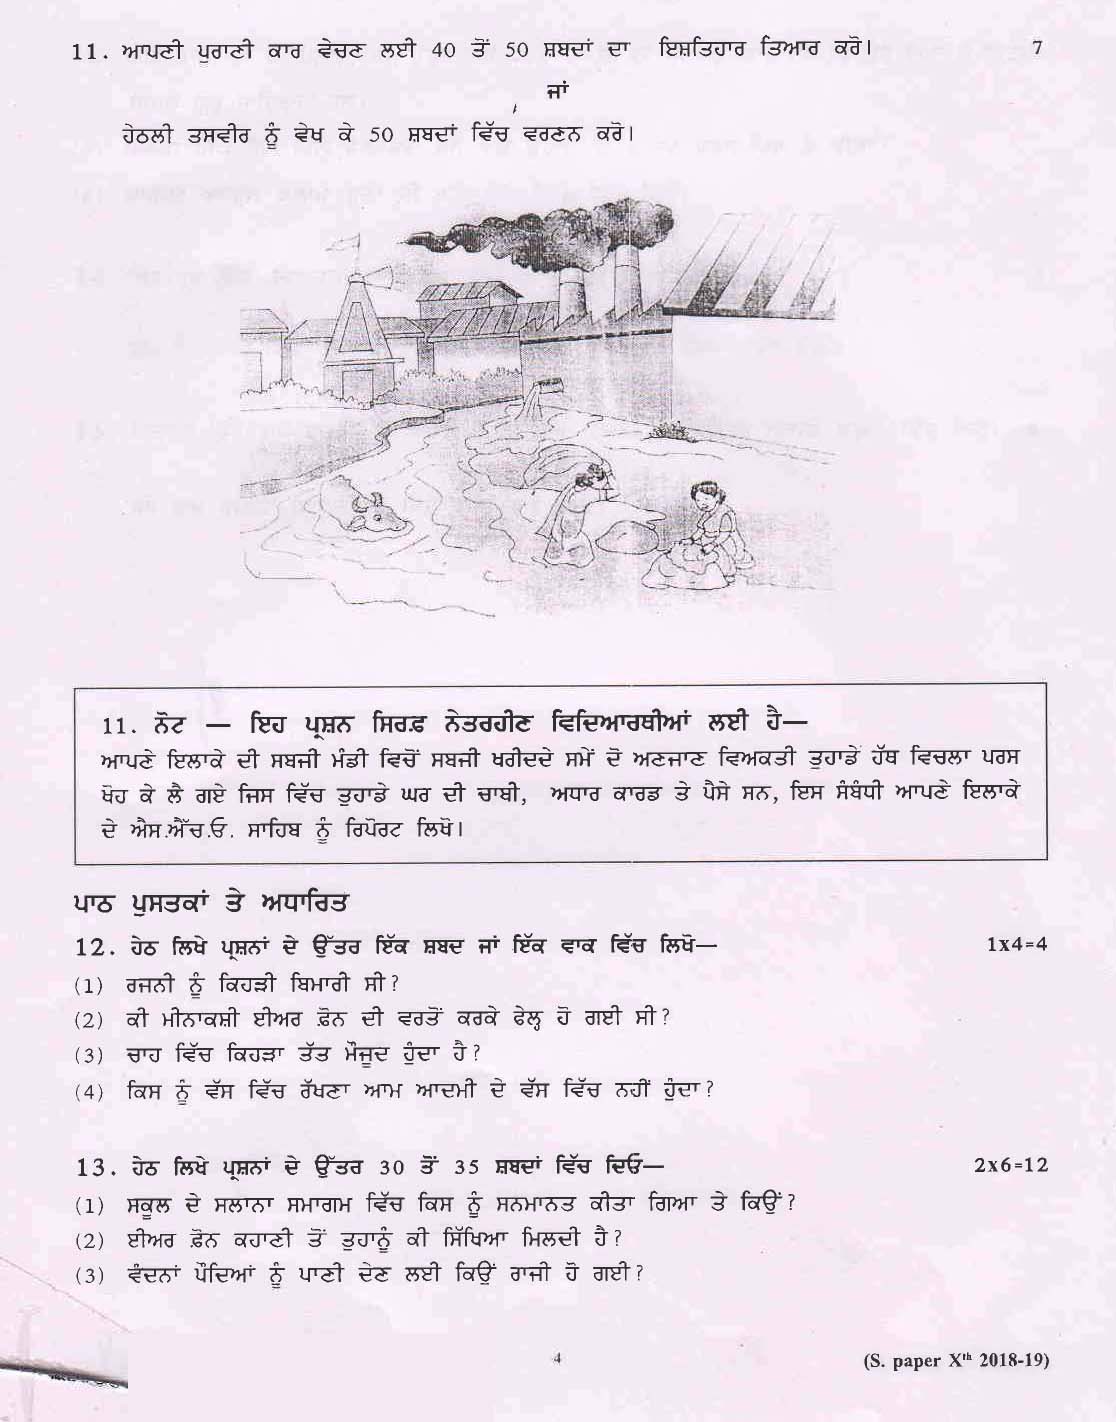 Punjabi CBSE Class X Sample Question Paper 2018-19 - Image 4